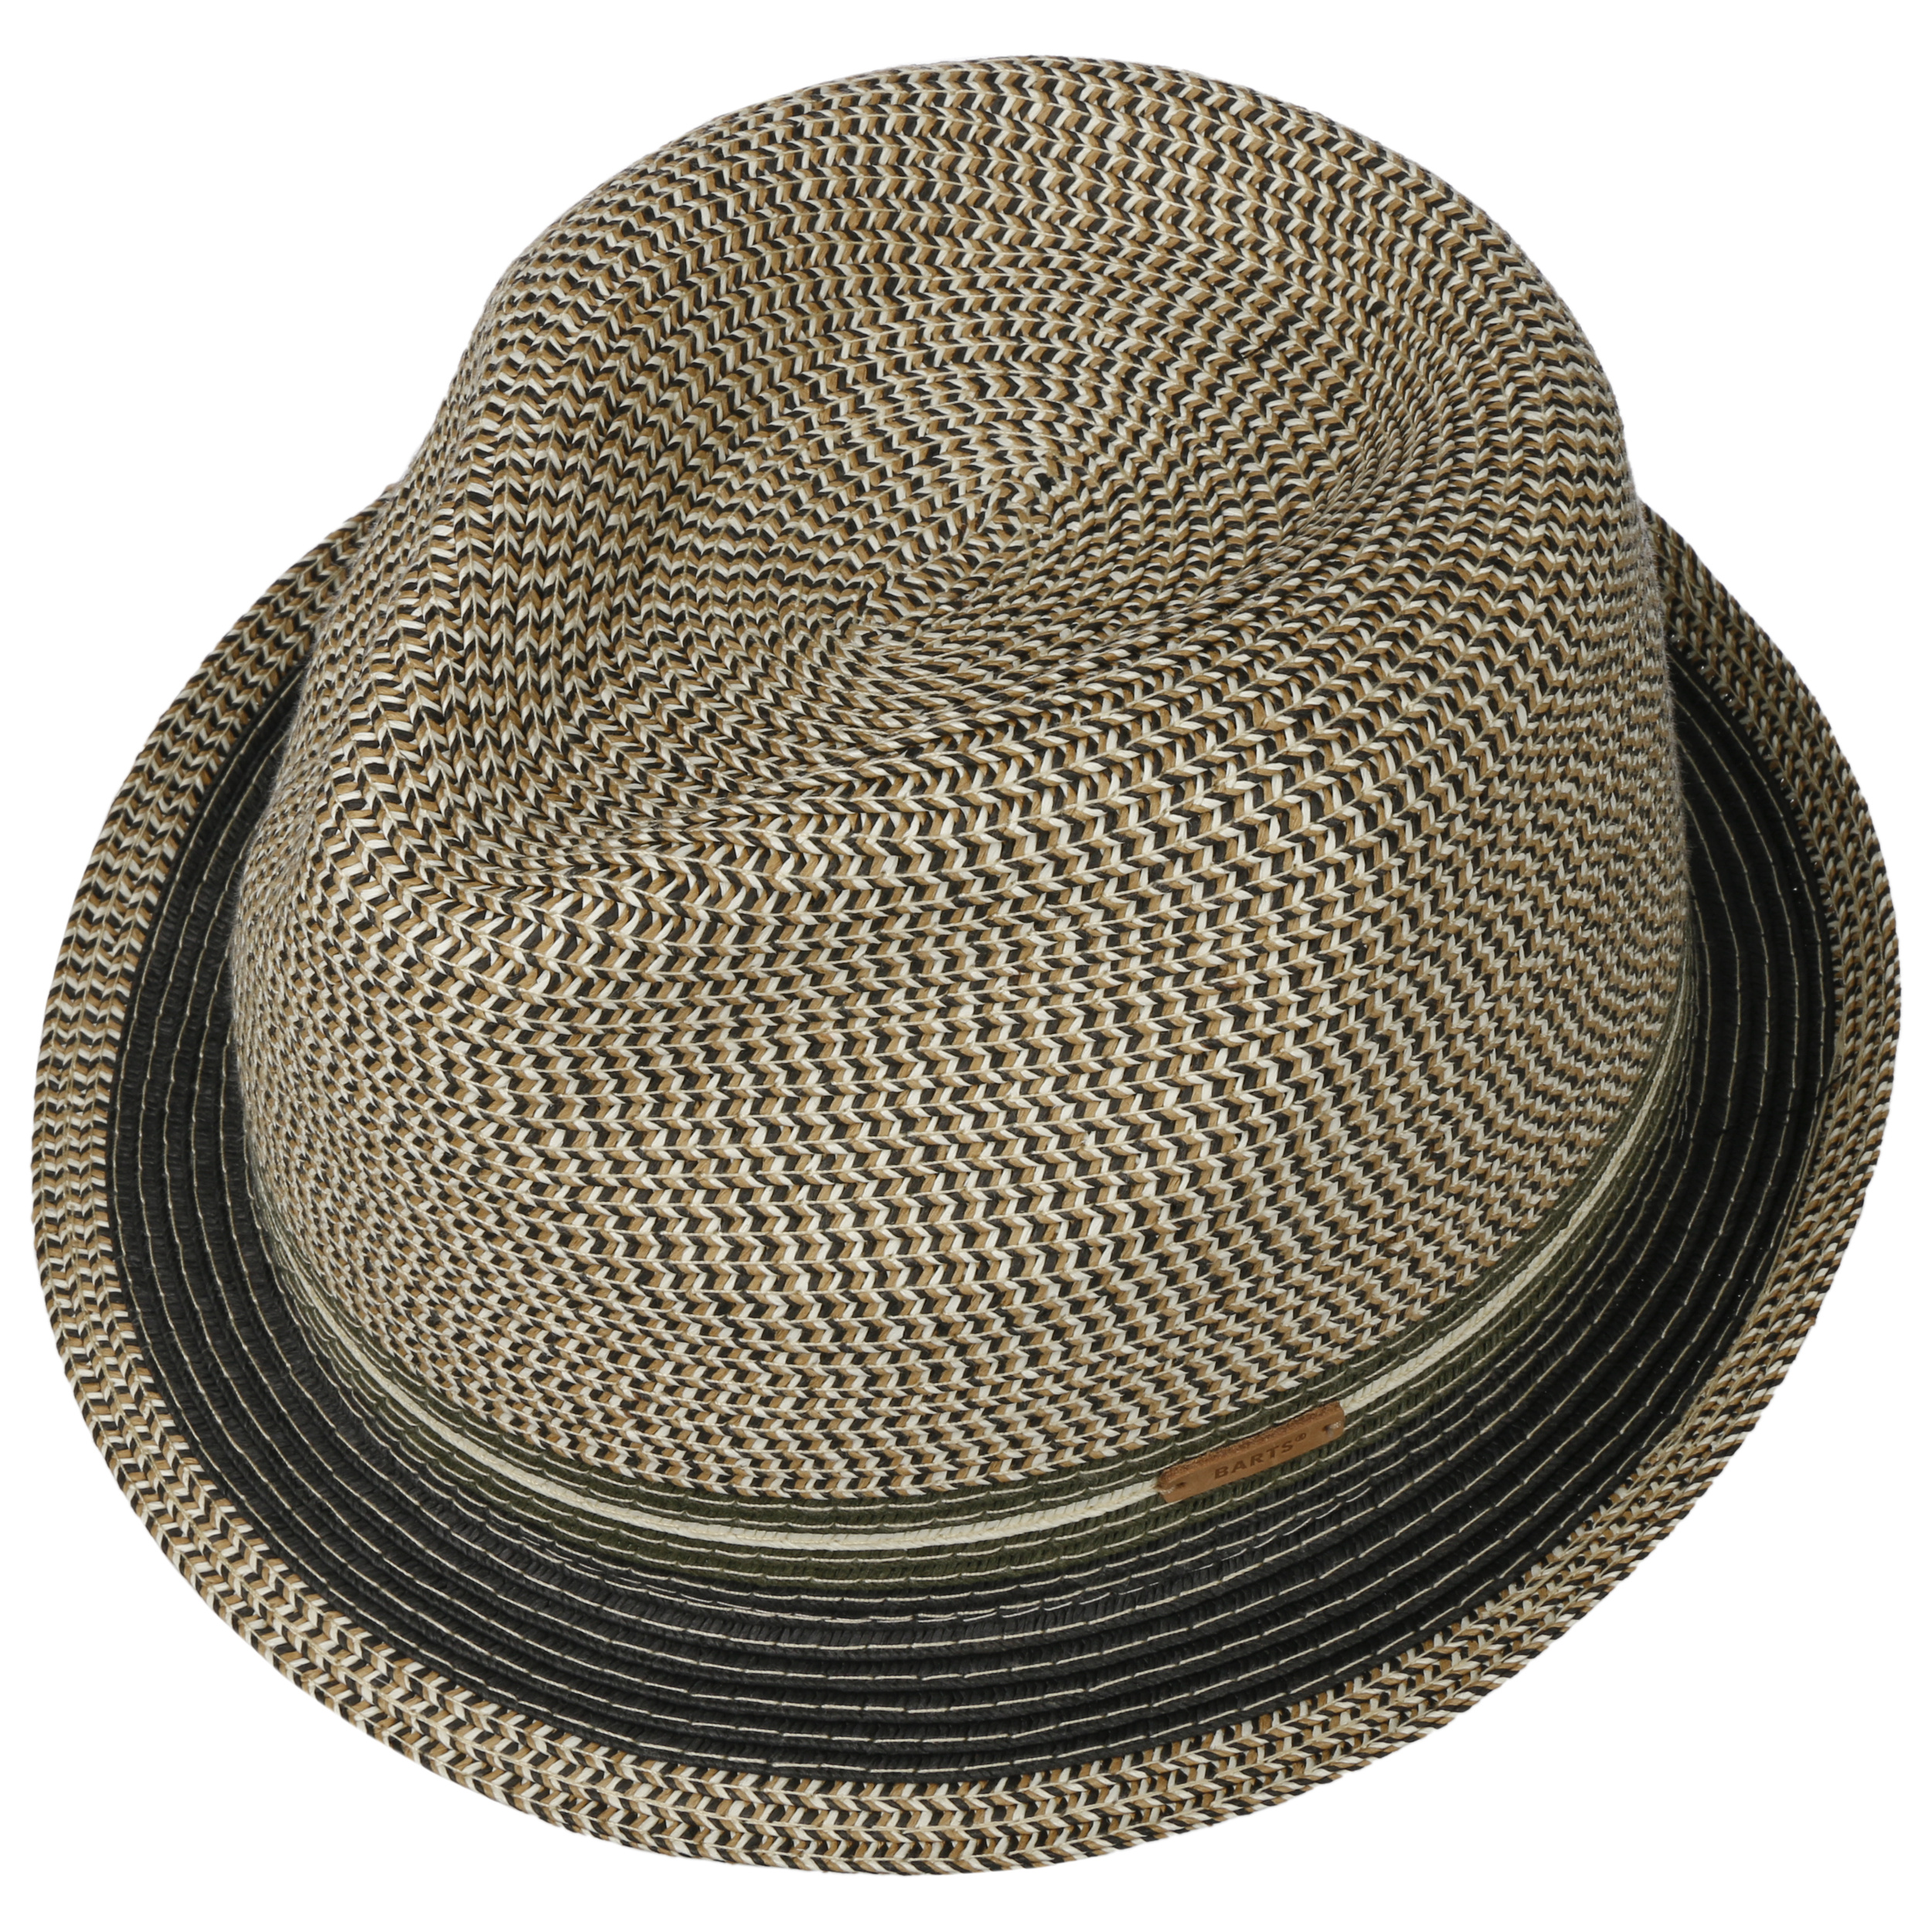 Fluoriet Trilby Hat by - Barts 32,90 £